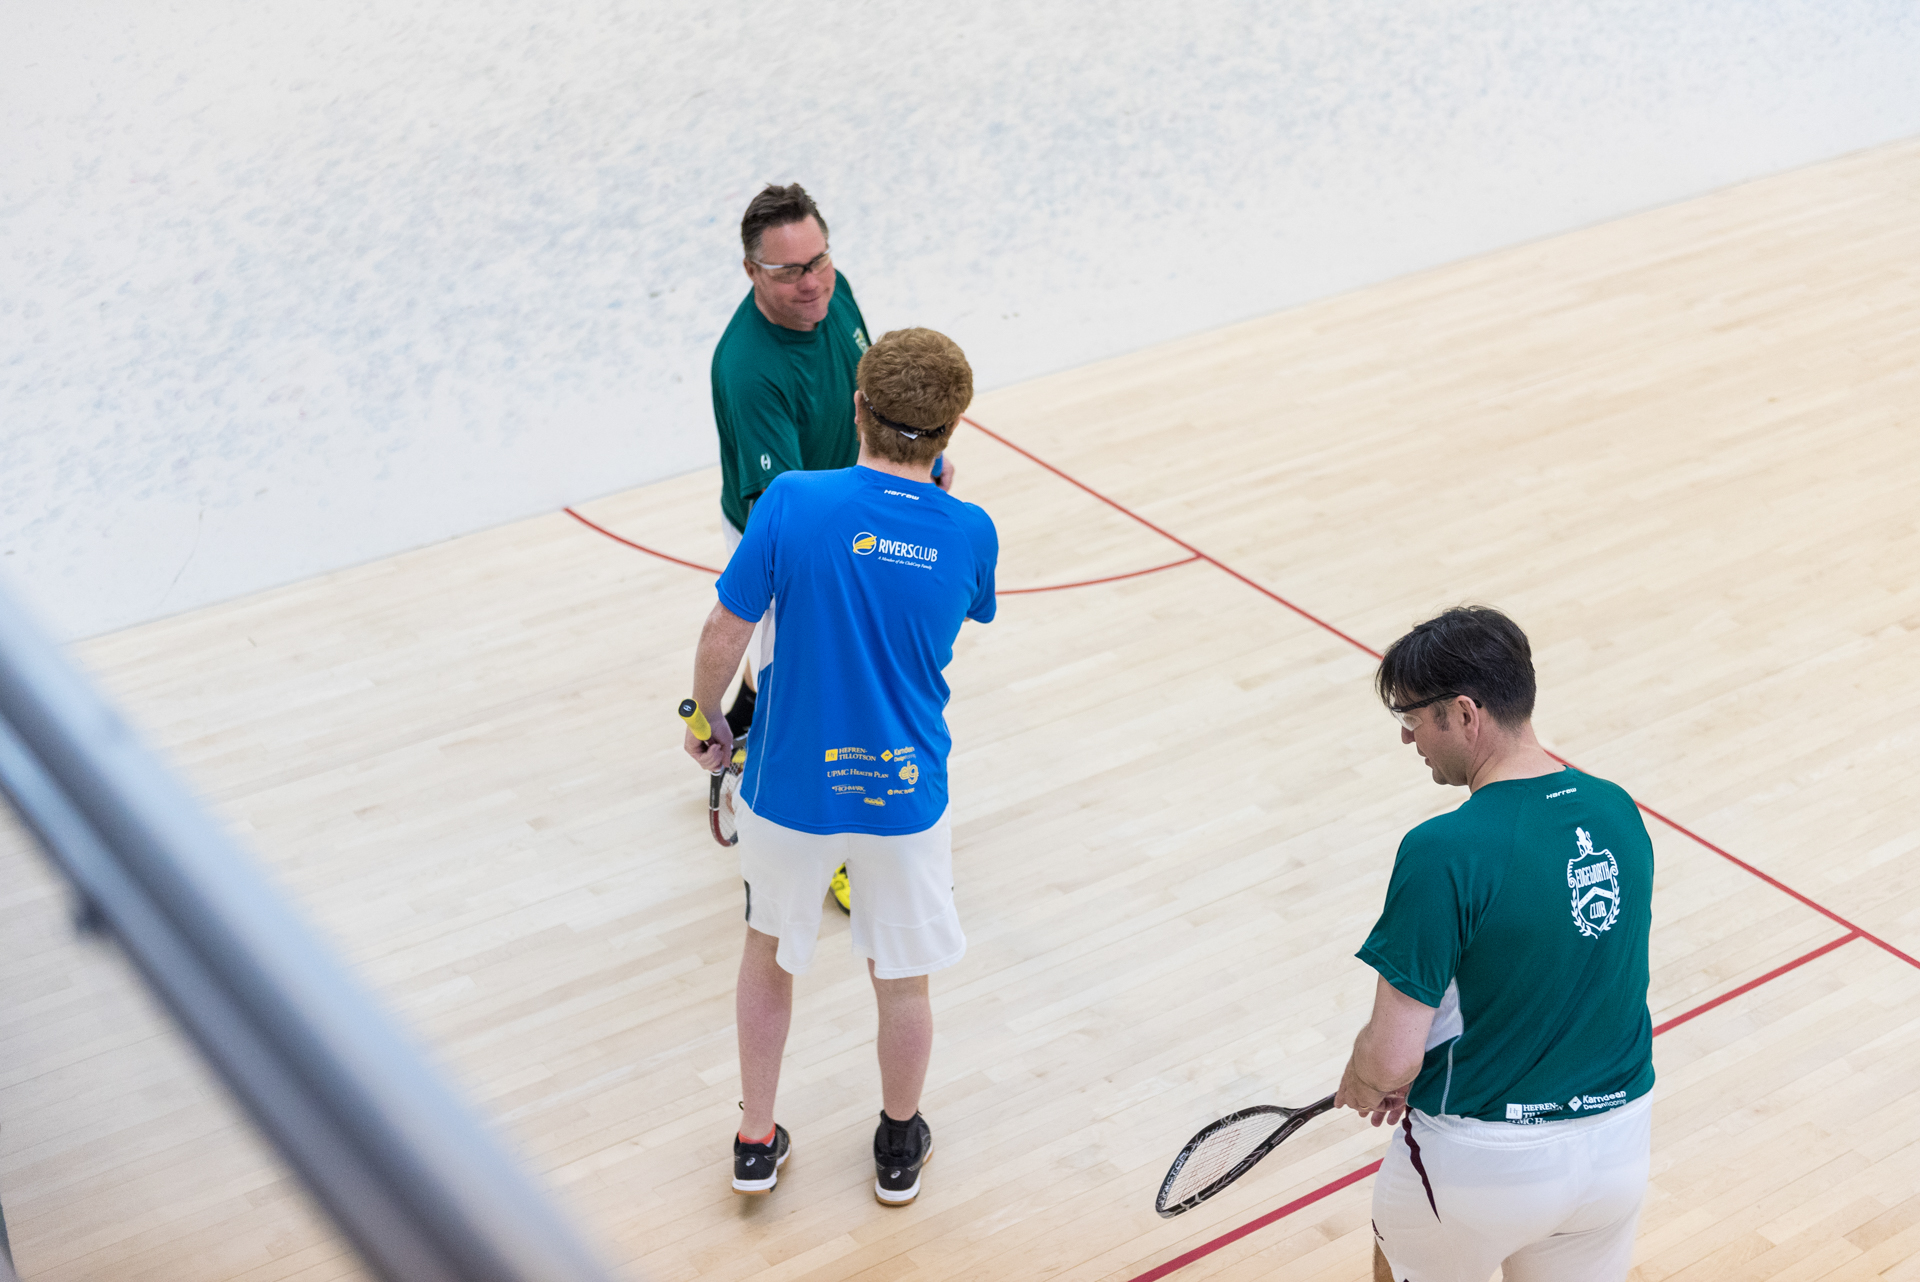 Students playing squash